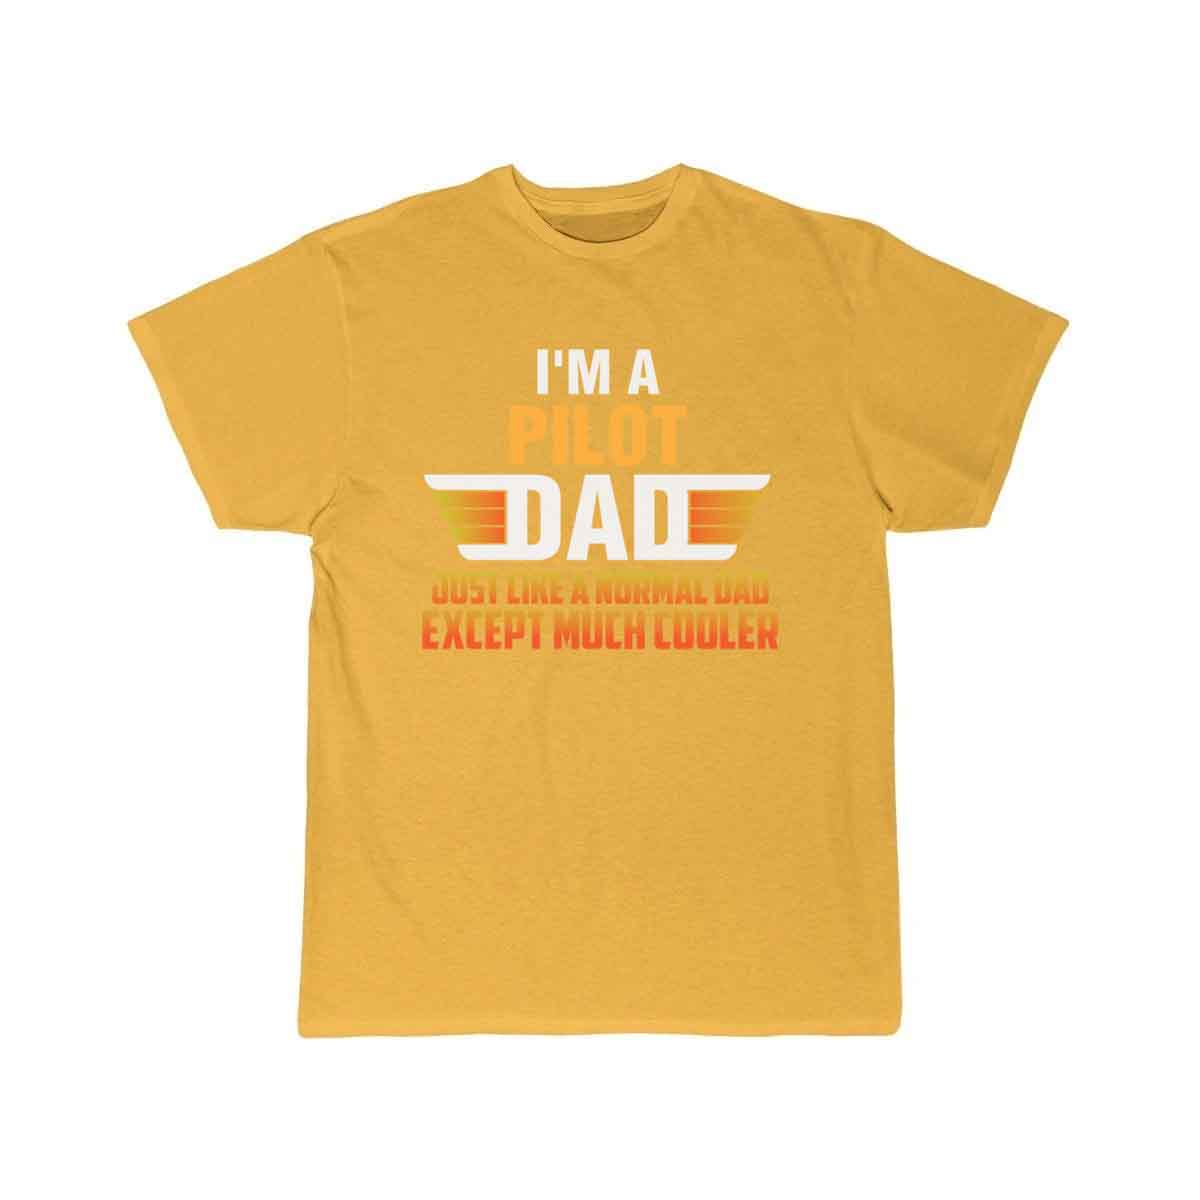 Pilot Dad - I'm A Pilot Dad just like a normal dad T-SHIRT THE AV8R